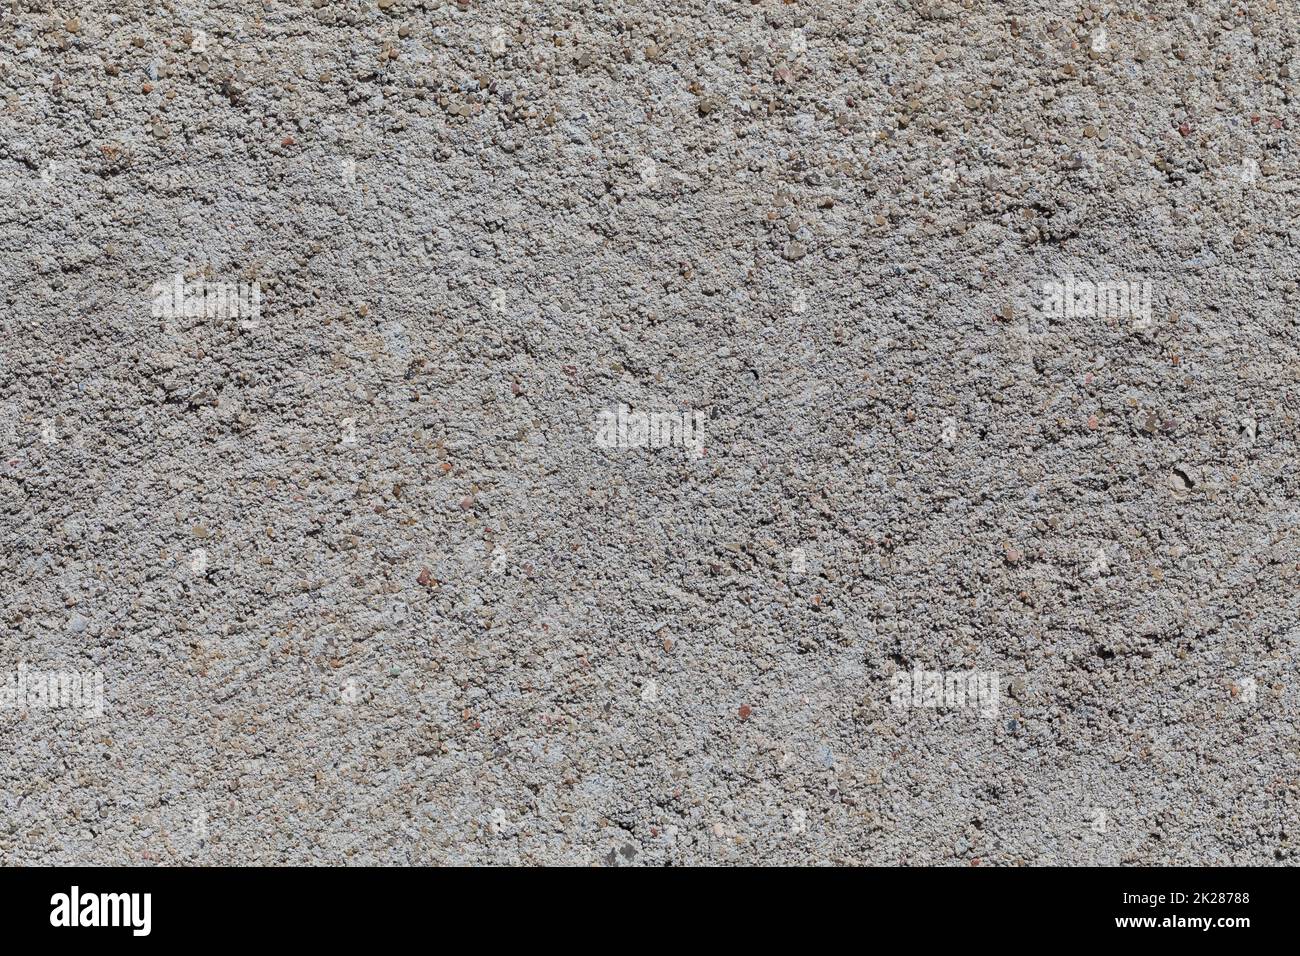 Crushed granite stones wall - close up Stock Photo